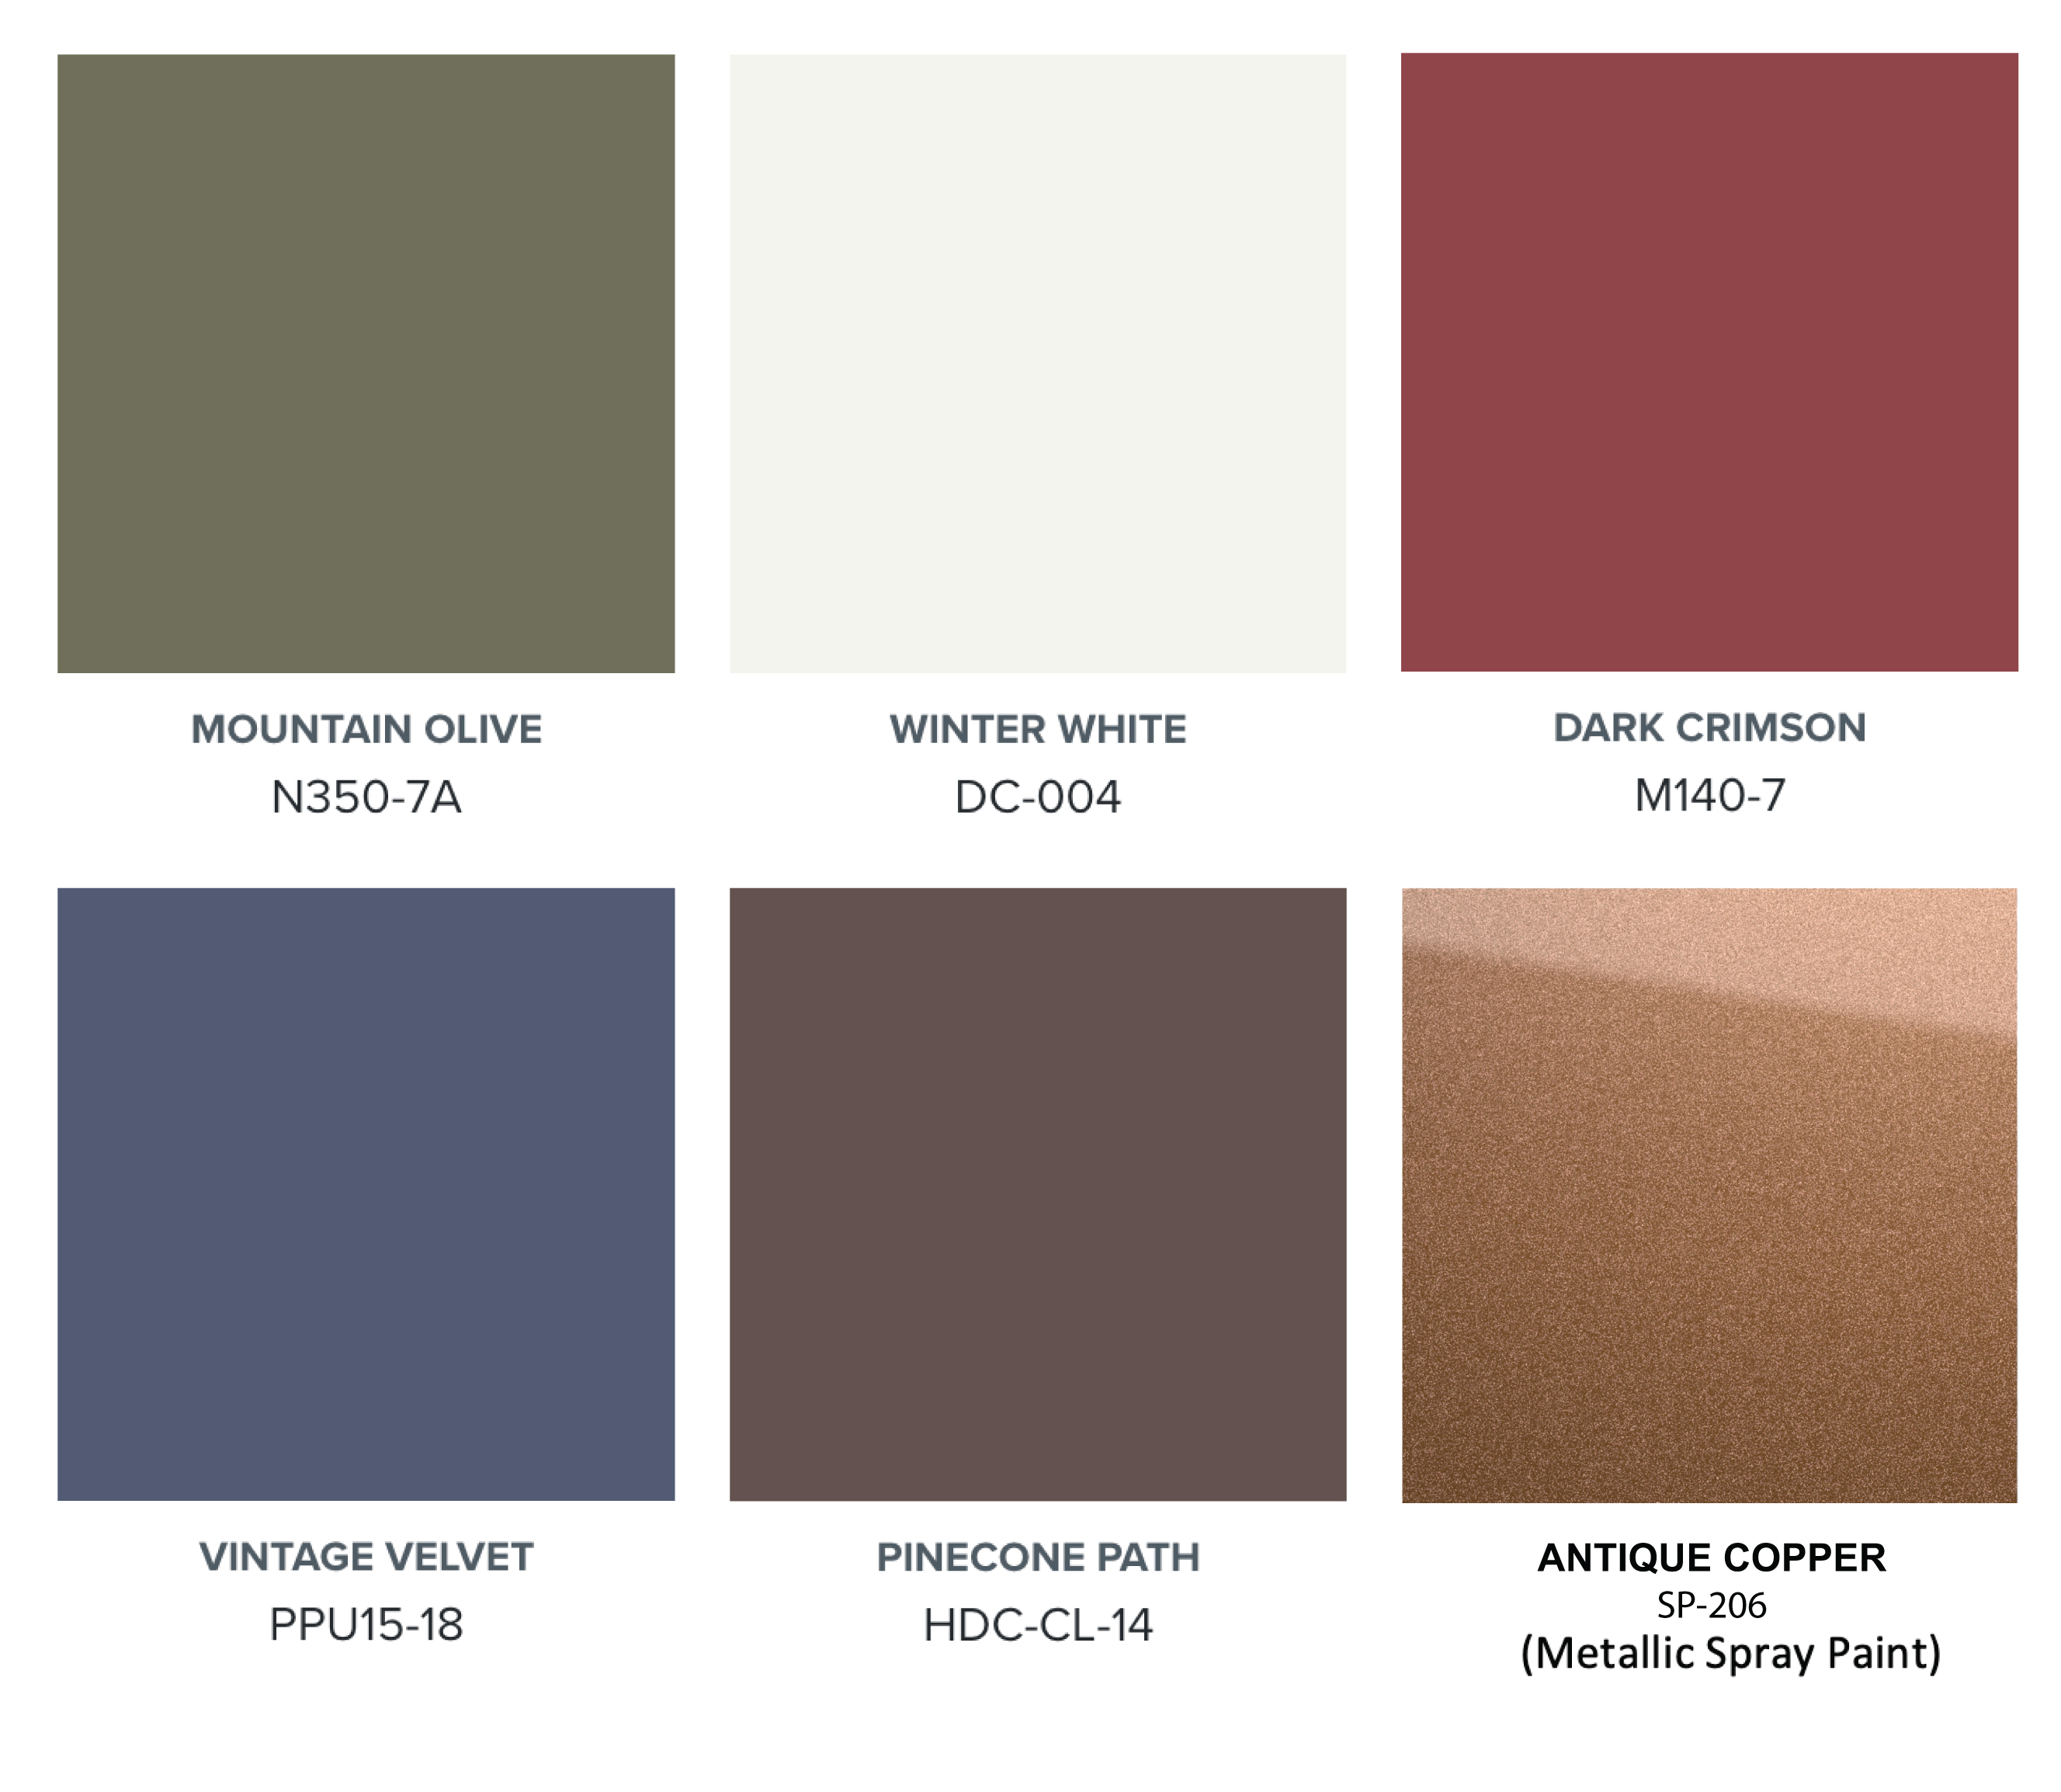 A palette of six colours – Mountain Olive, Winter White, Dark Crimson, Vintage Velvet, Pinecone Path, and Antique Copper (Metallic Spray Paint)